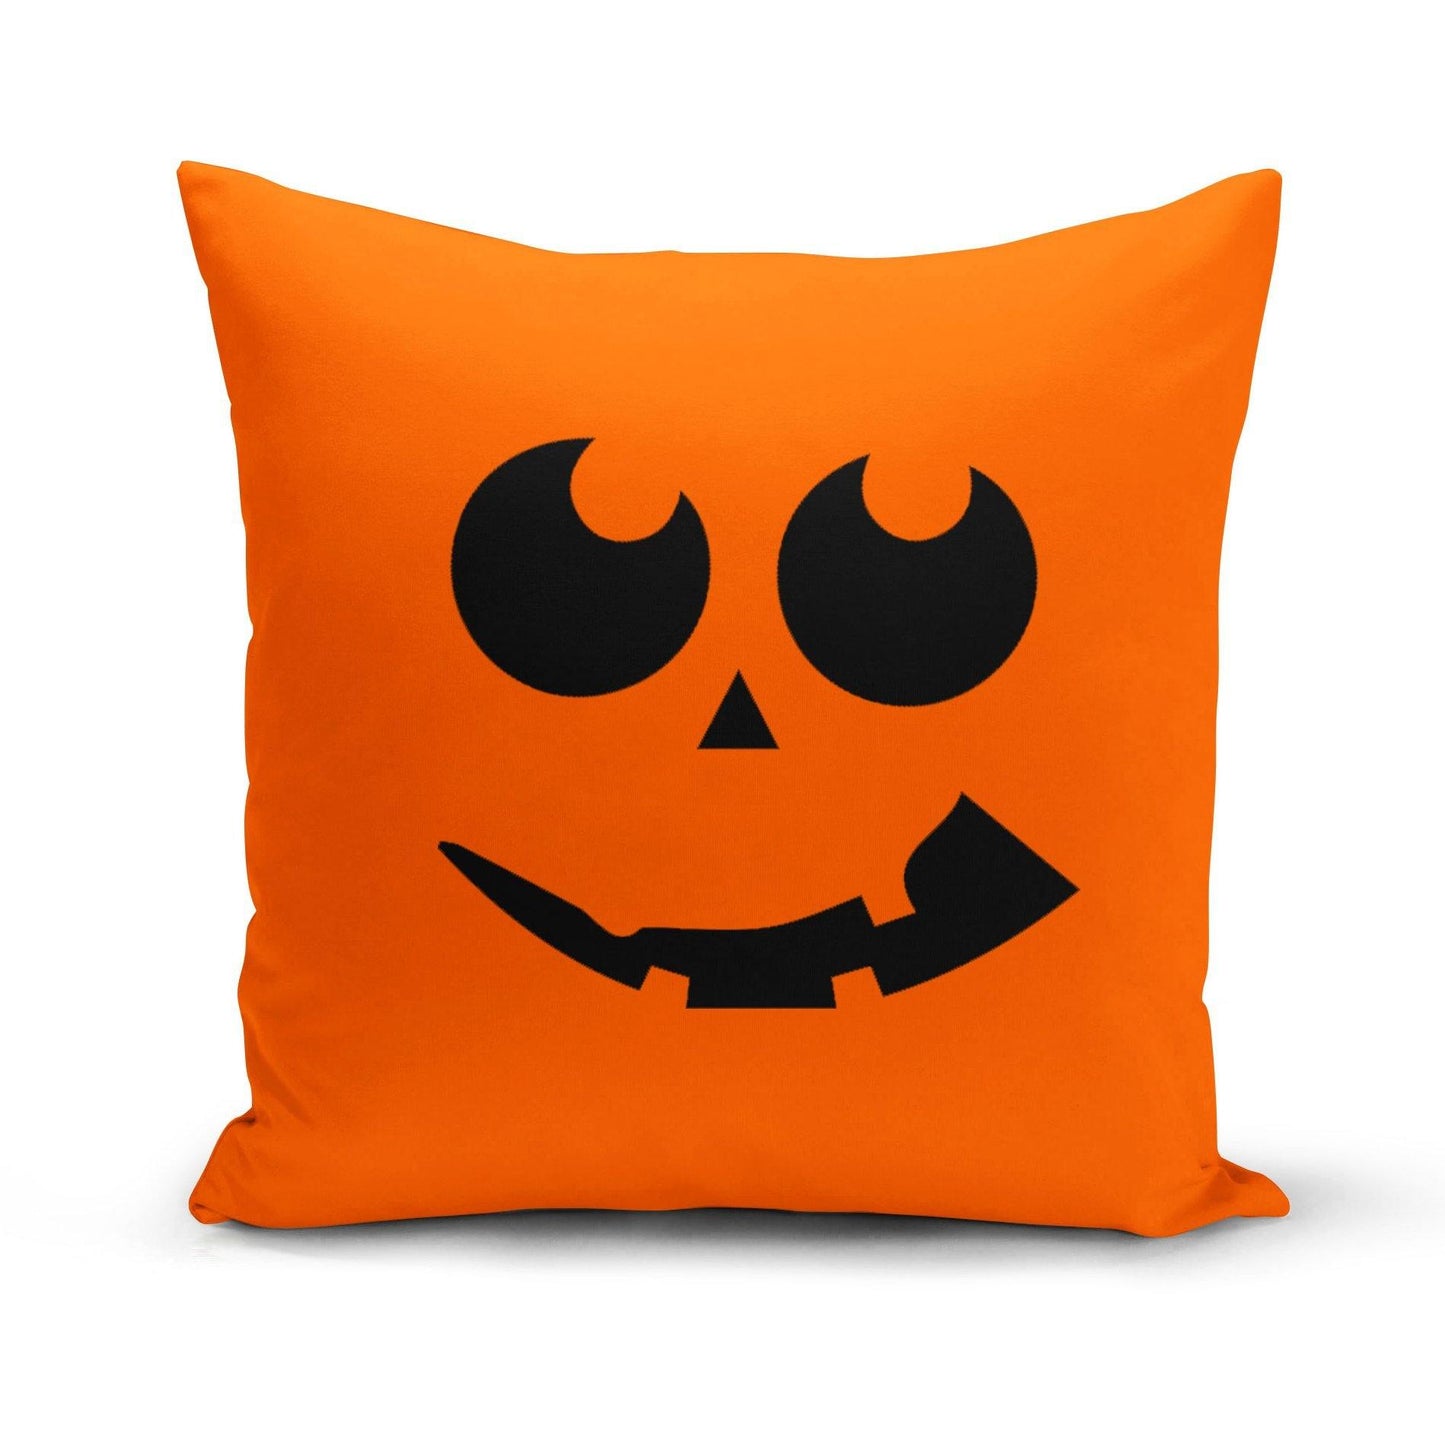 Orange Pumpkin Face Pillow Cover